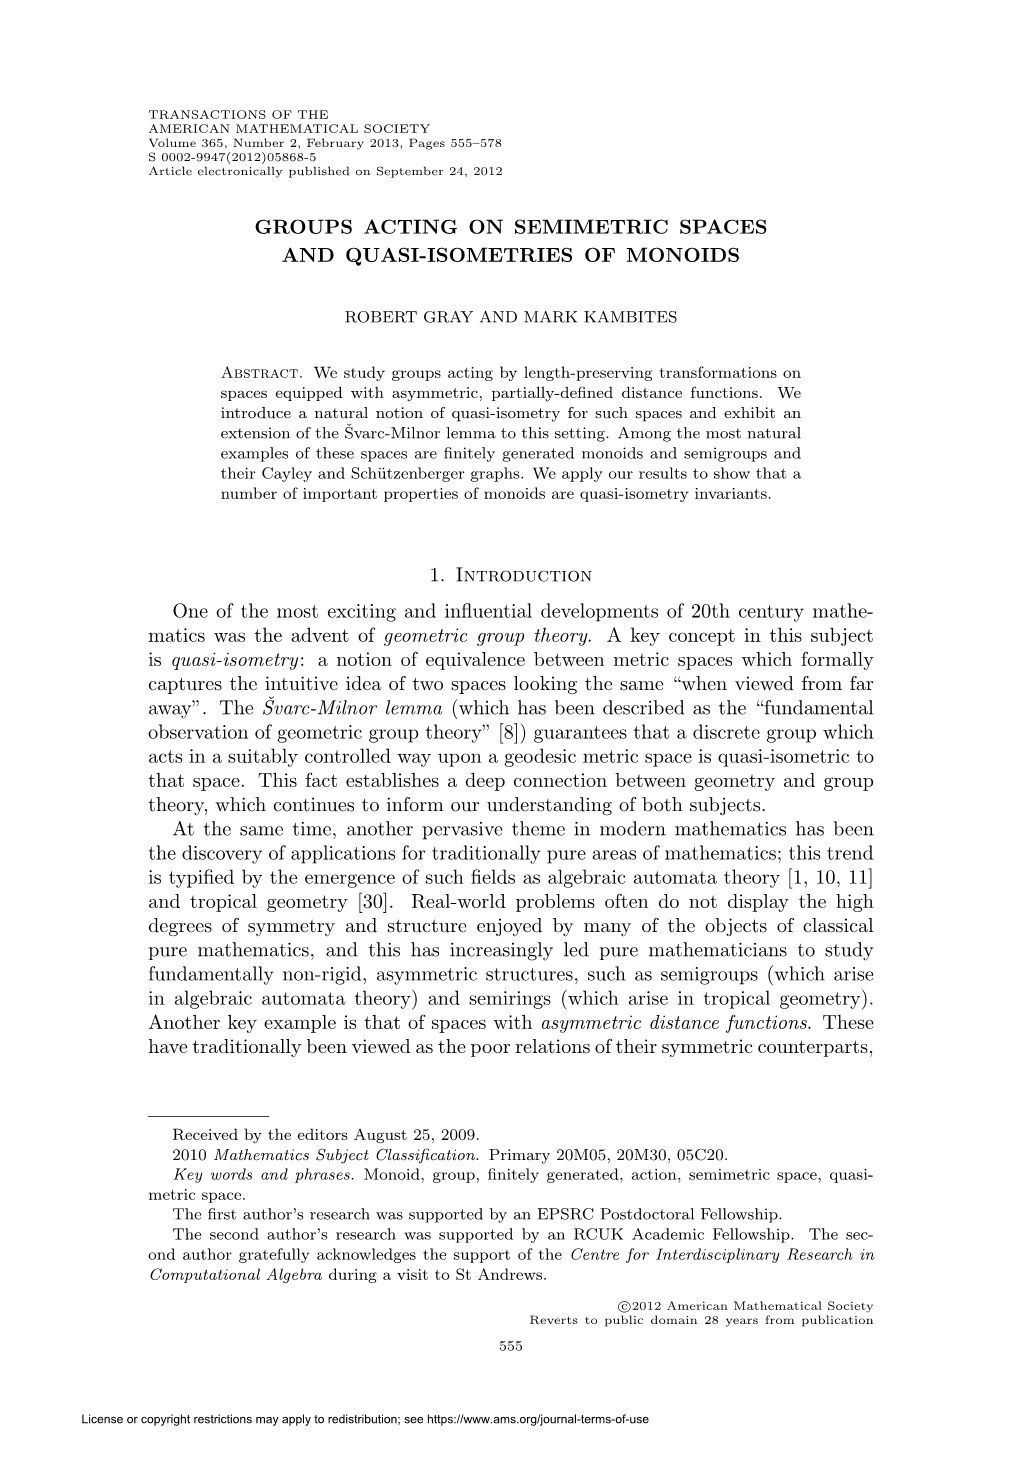 Groups Acting on Semimetric Spaces and Quasi-Isometries of Monoids